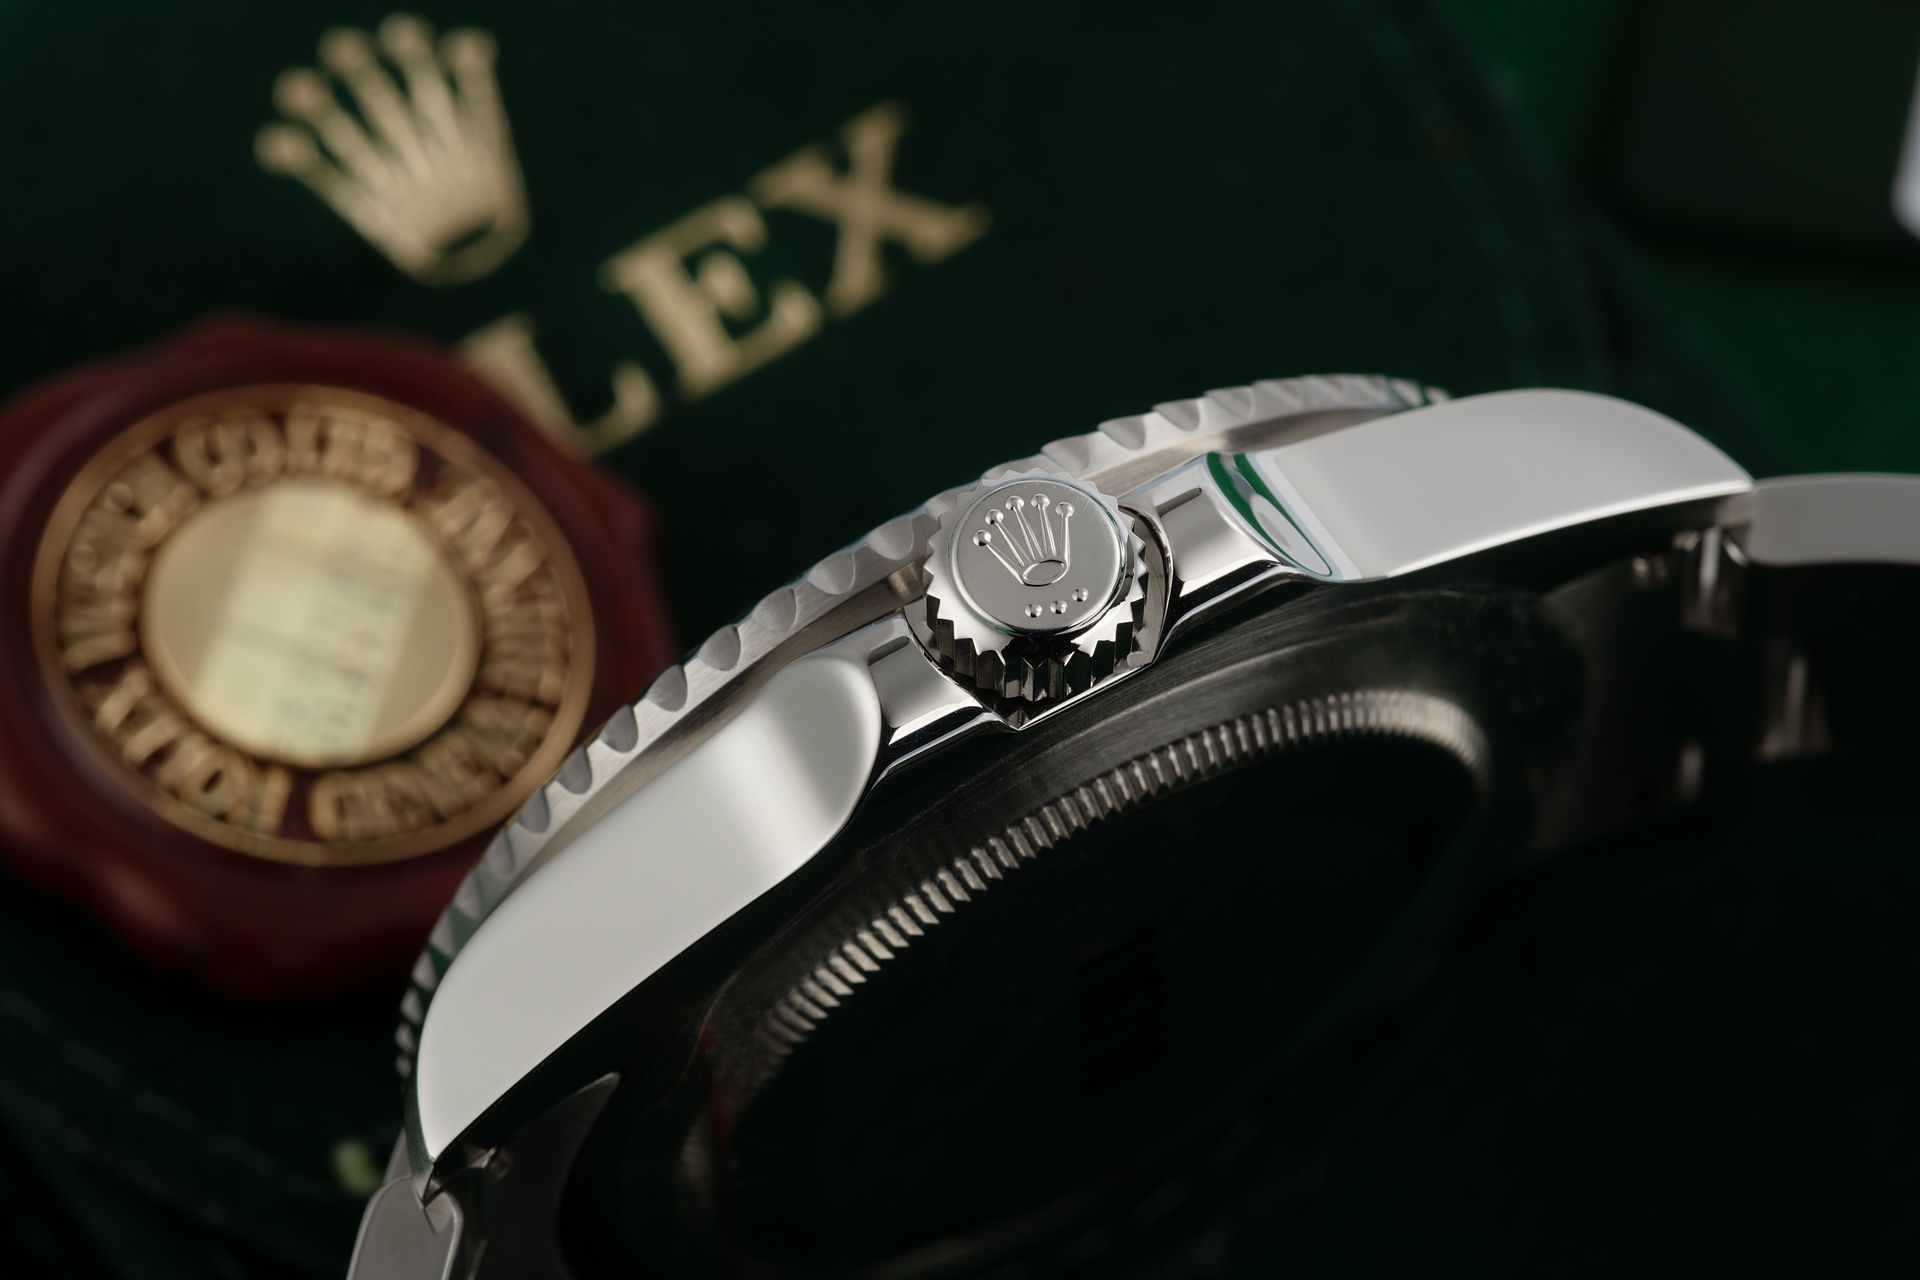 ref 116710LN | 'First Series' Current Model  | Rolex GMT-Master II